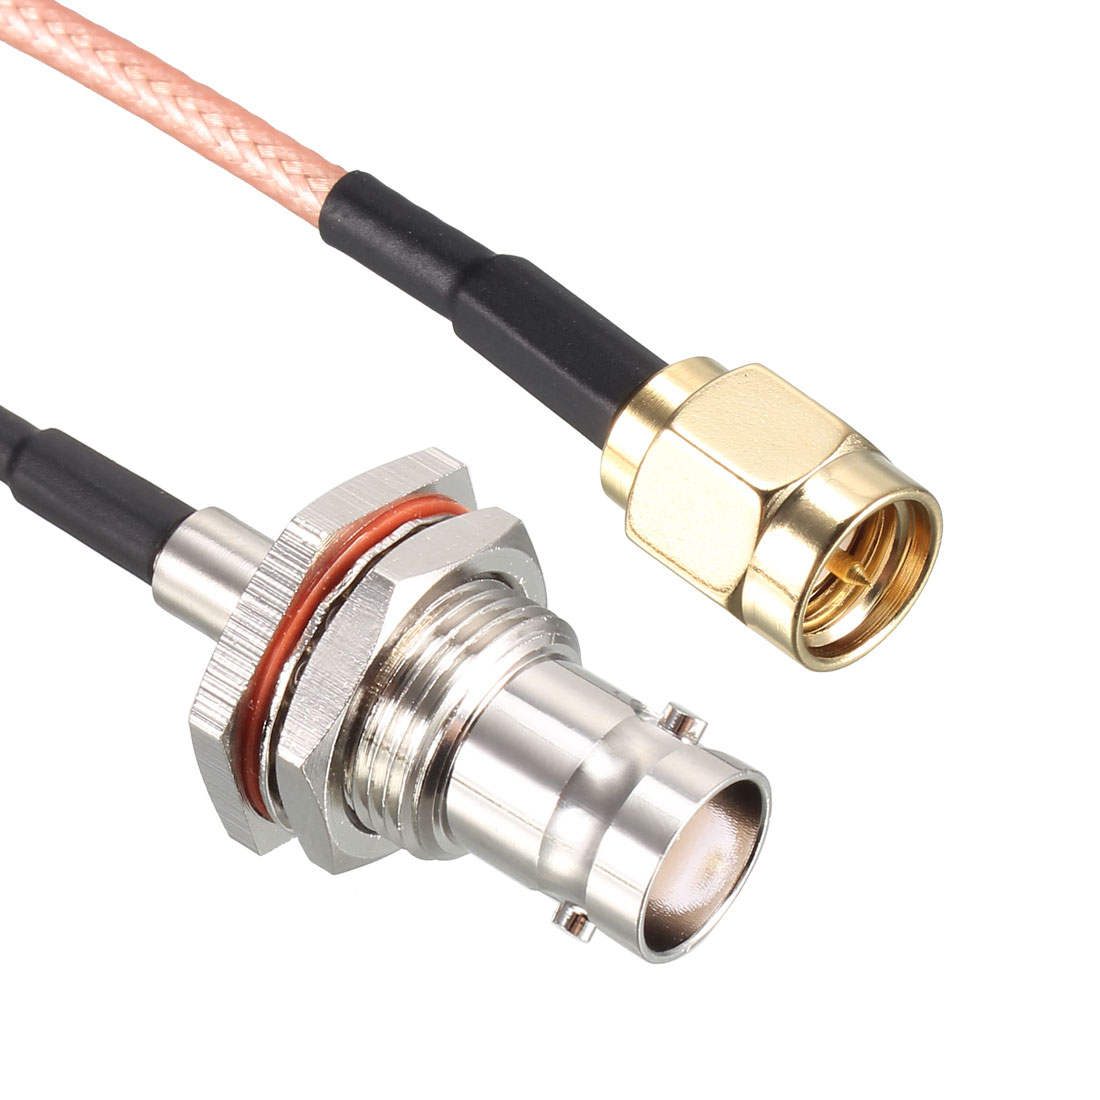 Unique Bargains SMA Male to BNC Female Bulkhead RF Coaxial Cable RG316 Coax Cable 8 Inch